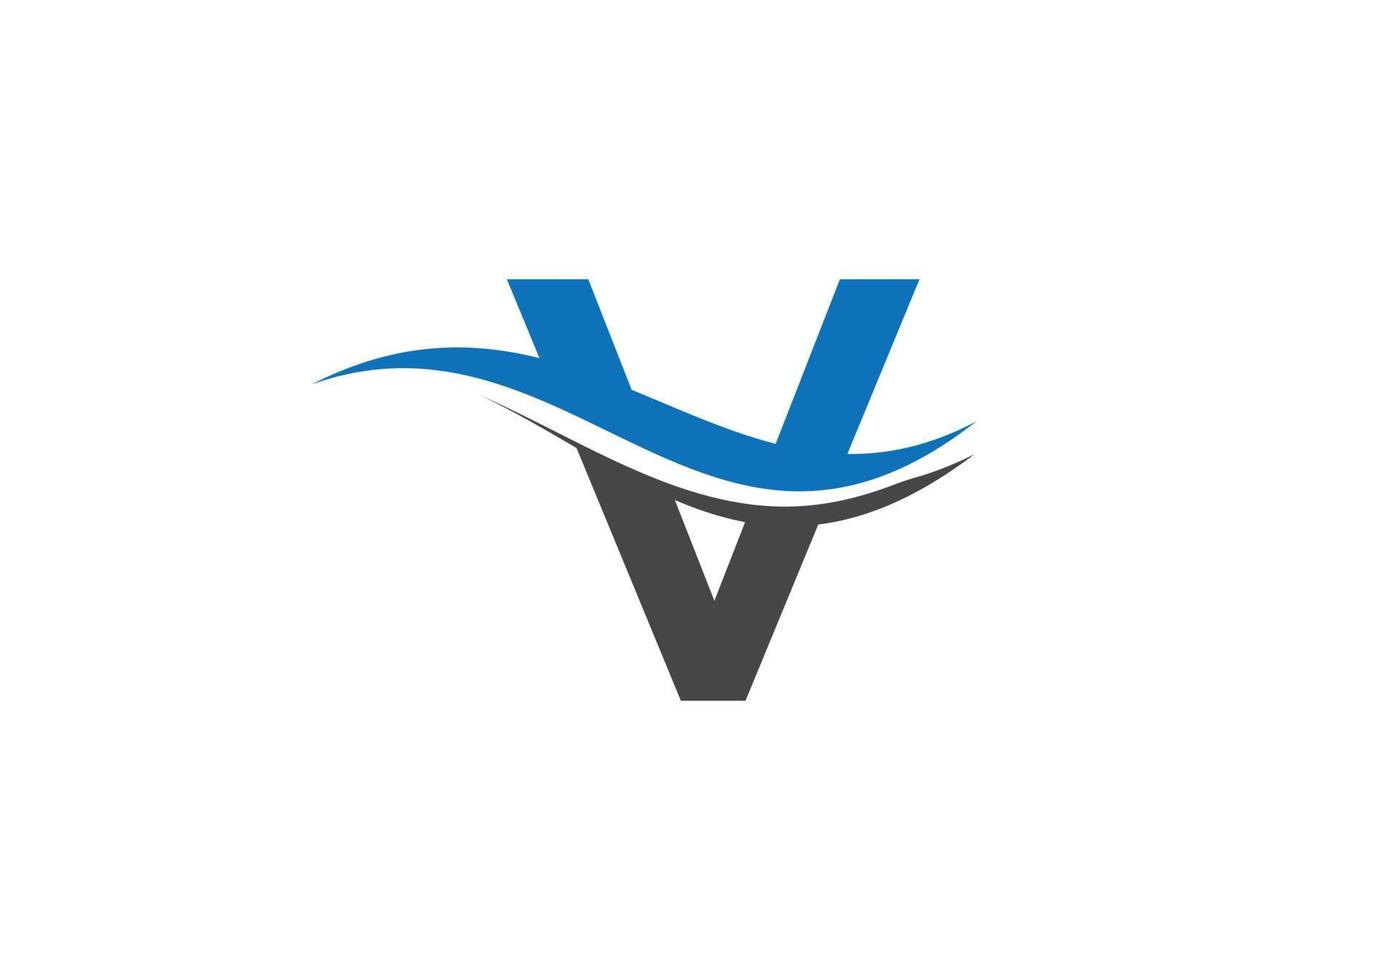 Monogram V Logo Design for Business and Company Identity vector